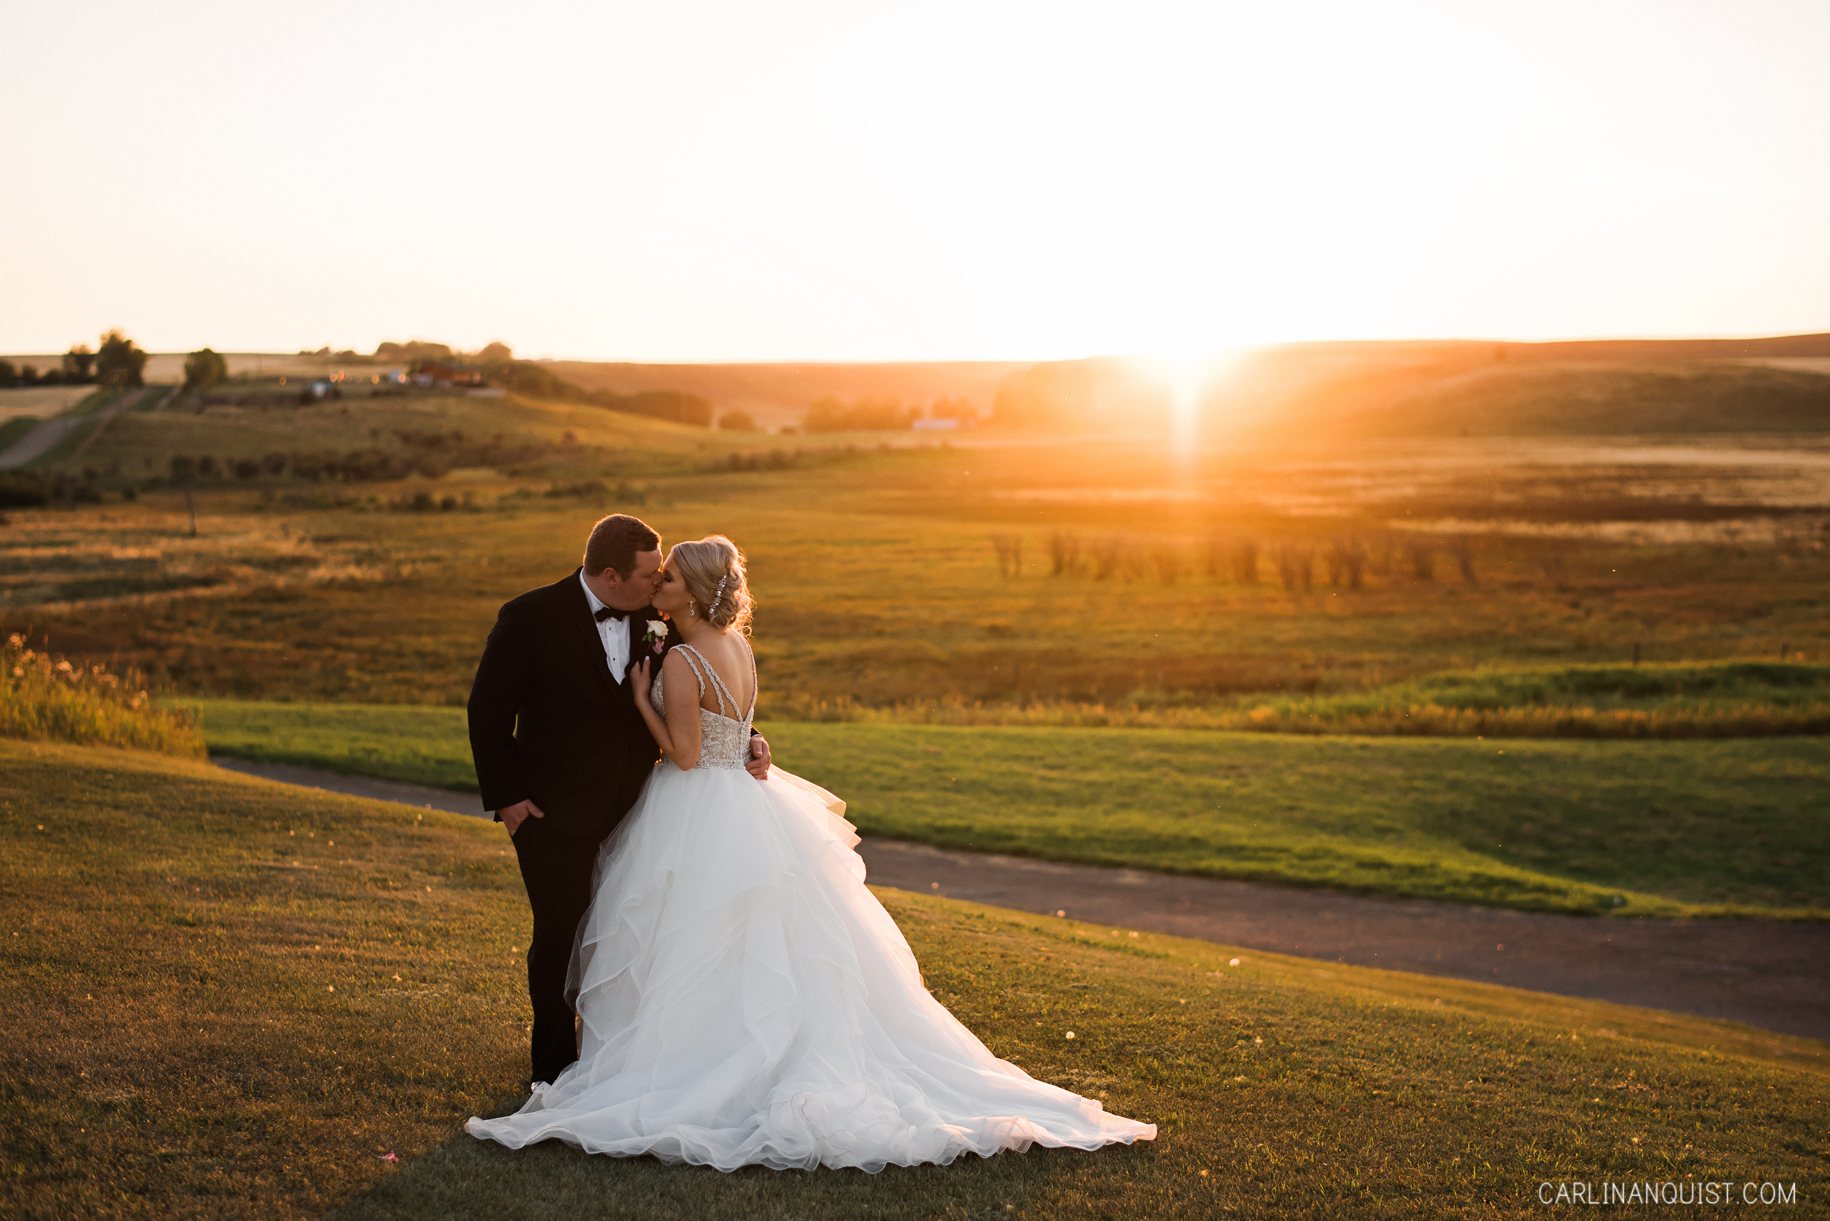 Carlin Anquist | Apple Creek Wedding Photographer | Sunset Bridal Portraits